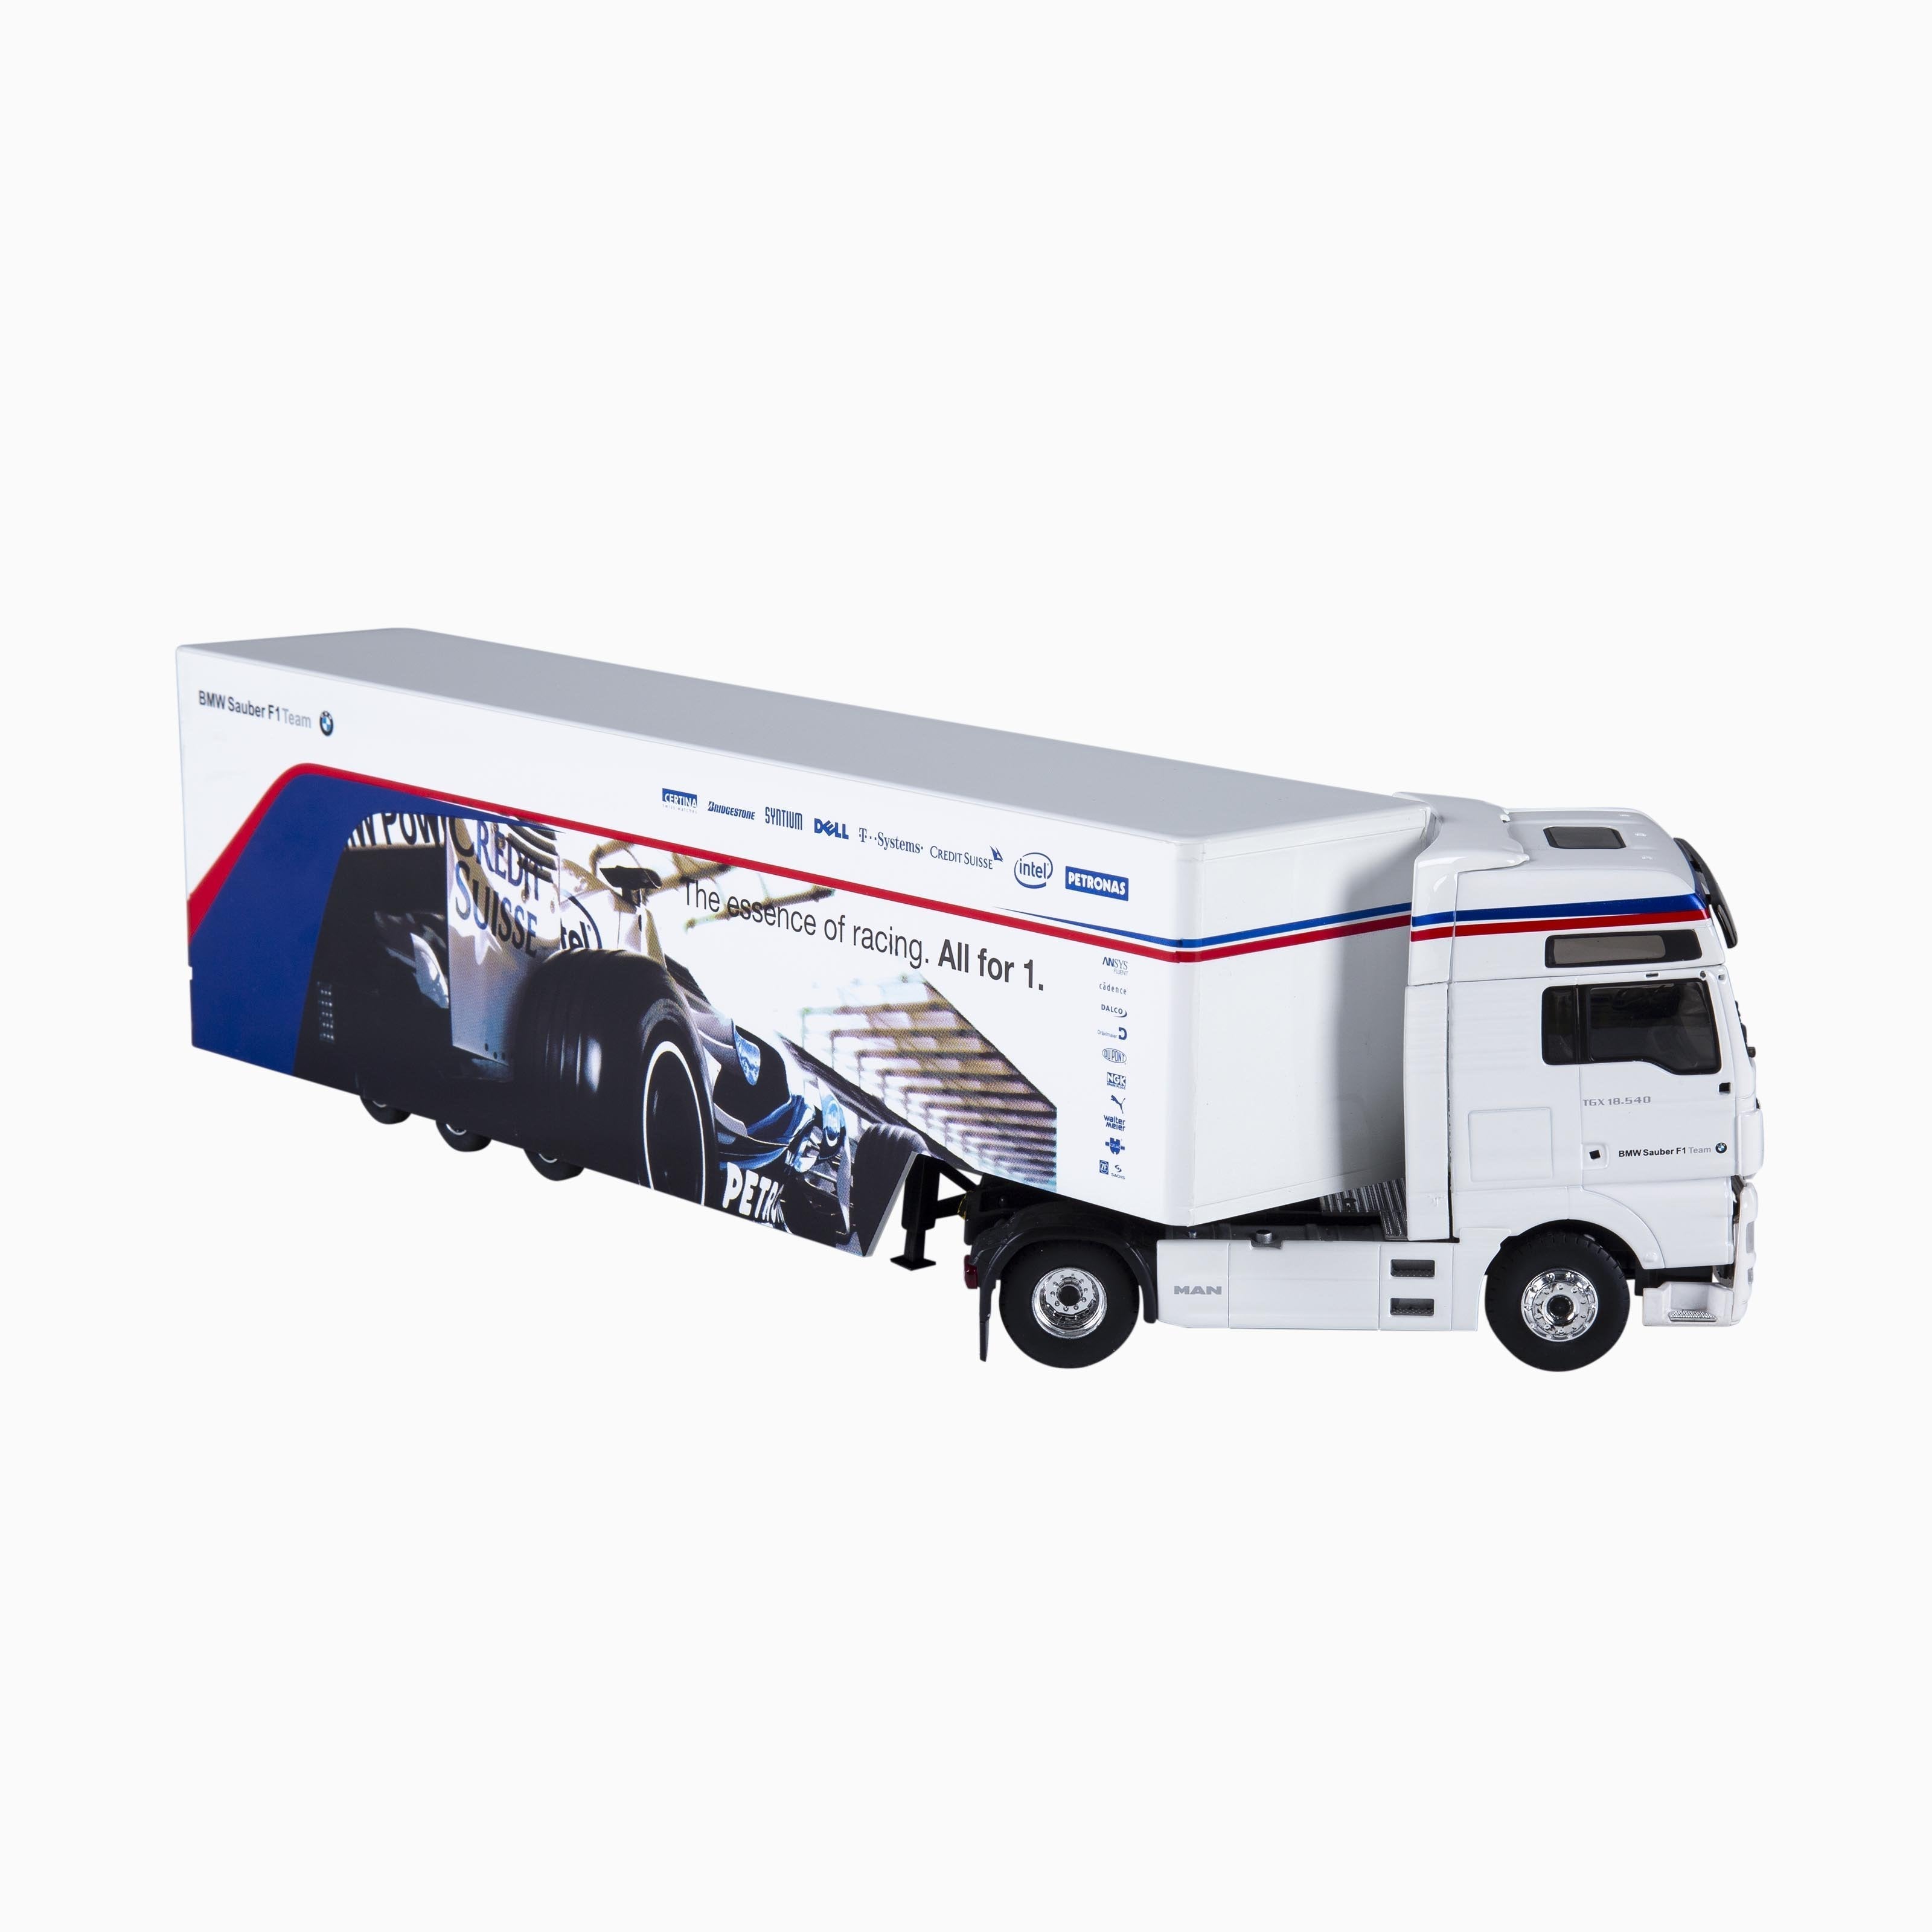 BMW Sauber F1 Team Truck-Scale Model-GPX Store -gpx-store